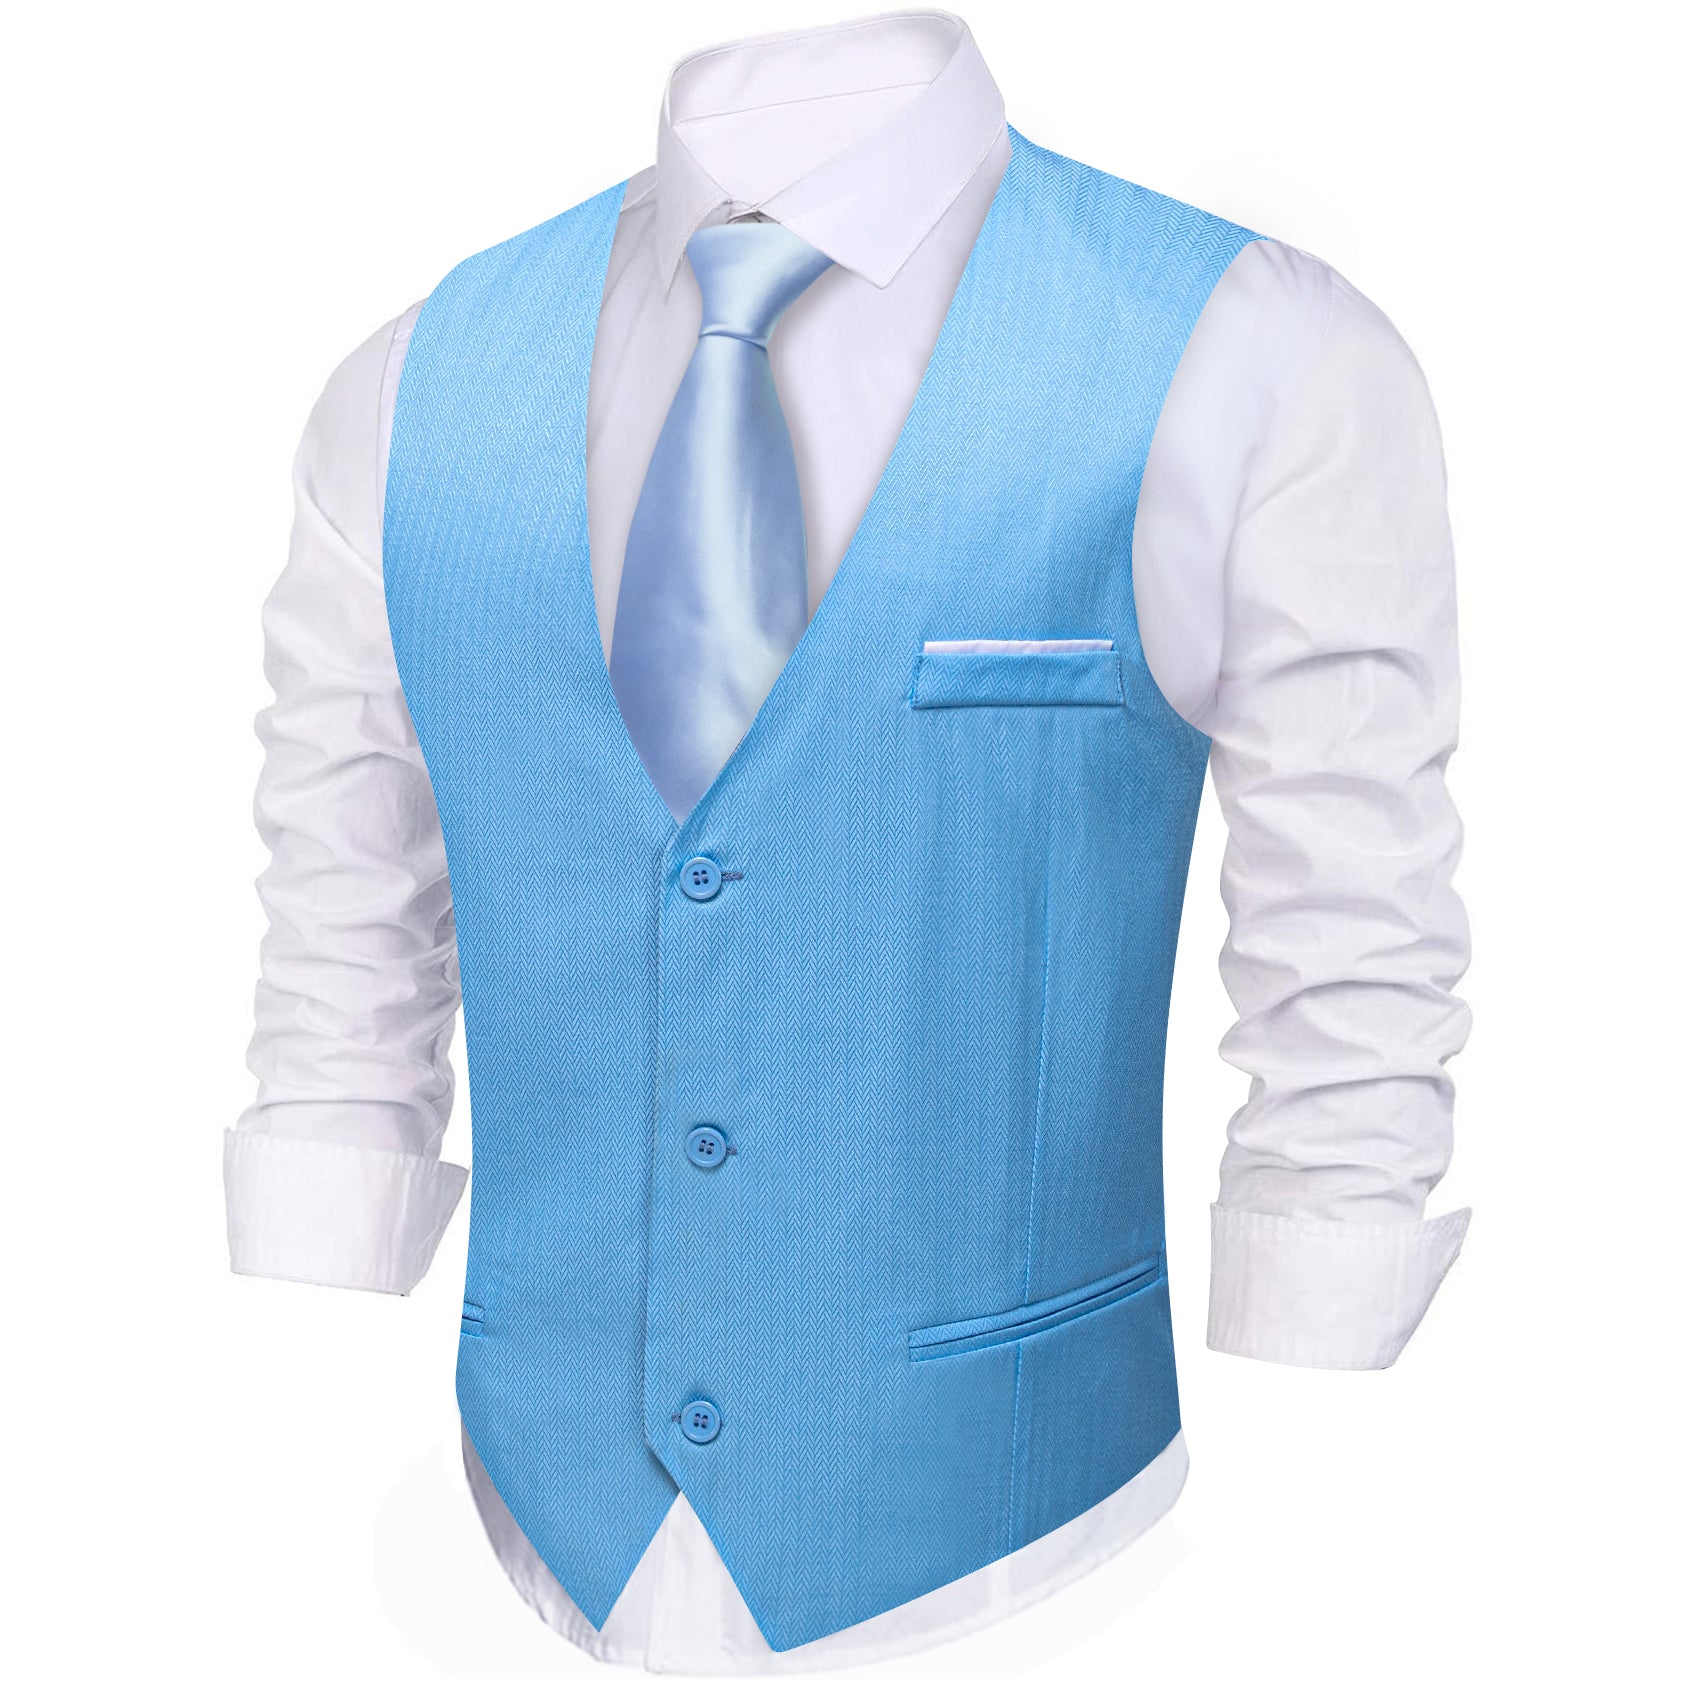 Barry.wang Men's Work Vest Sky Blue Solid Vest Suit for Business